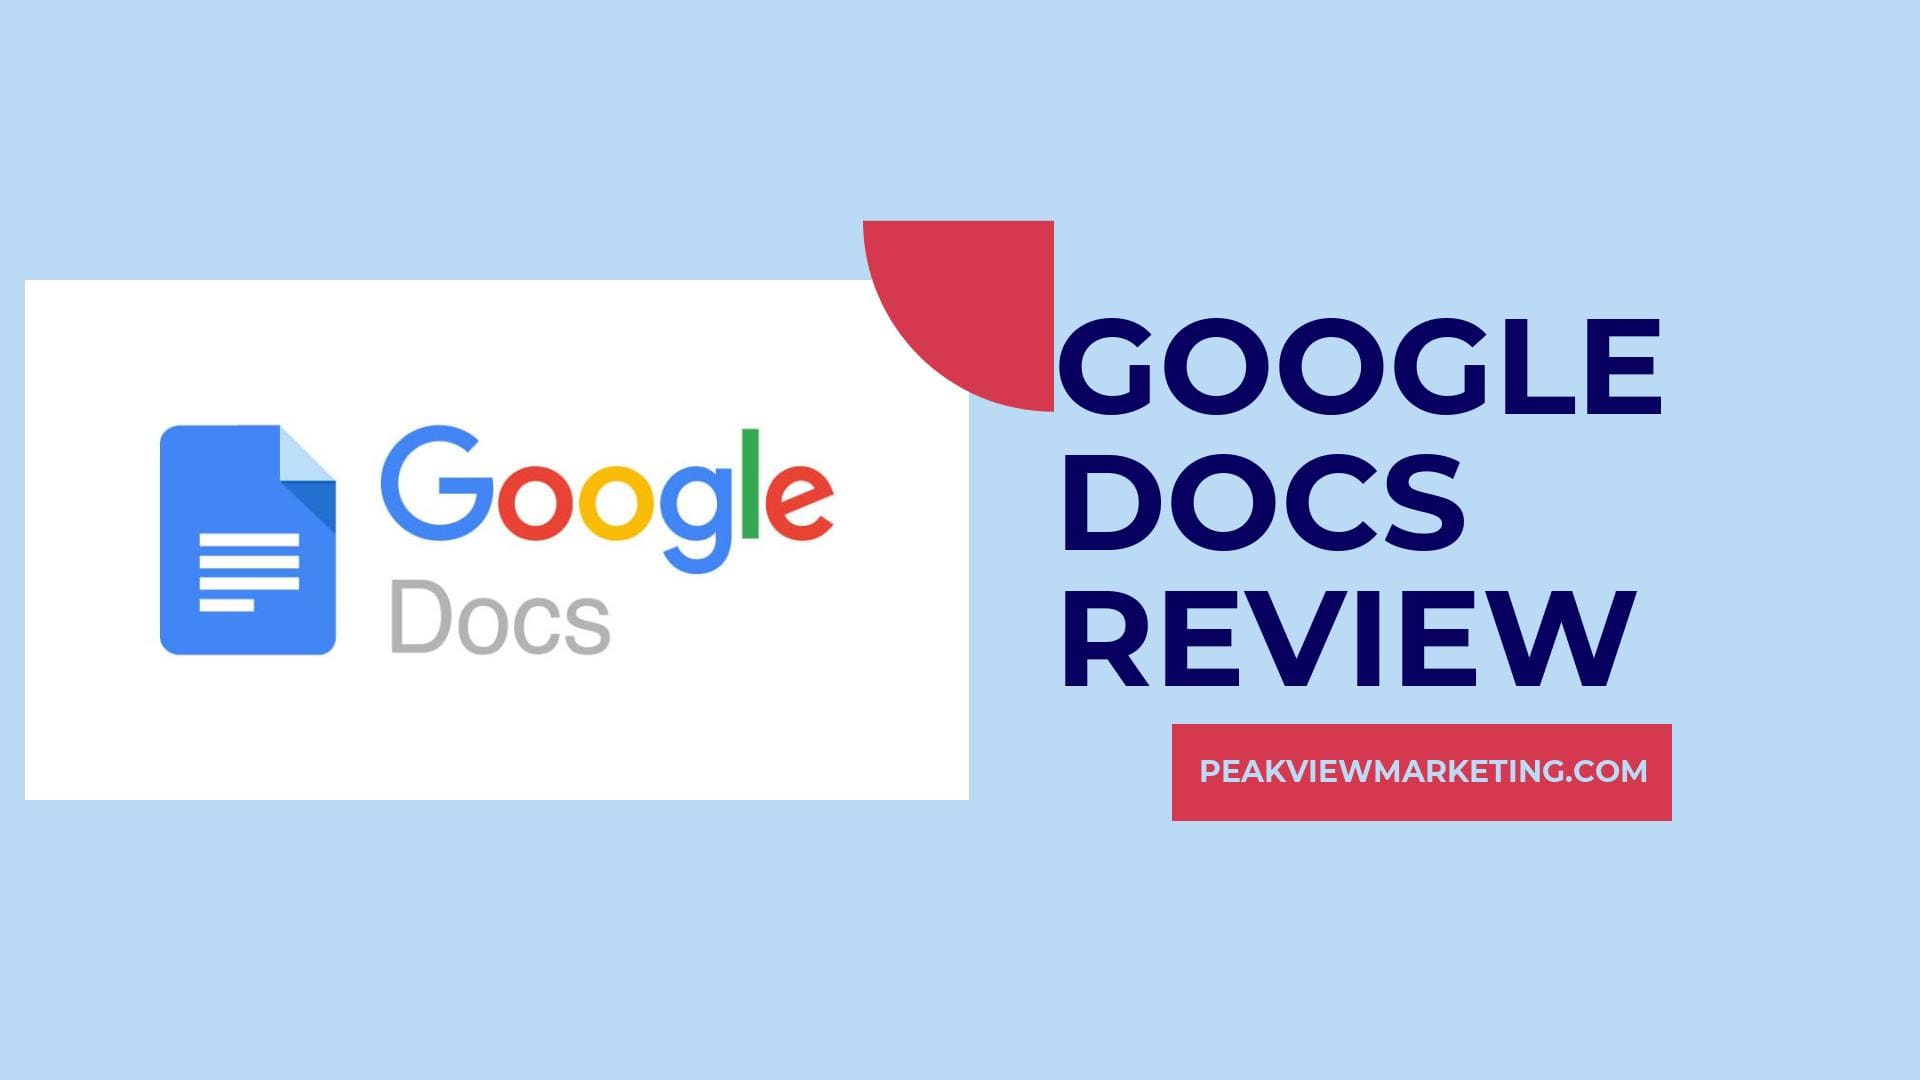 Google Docs Review Image